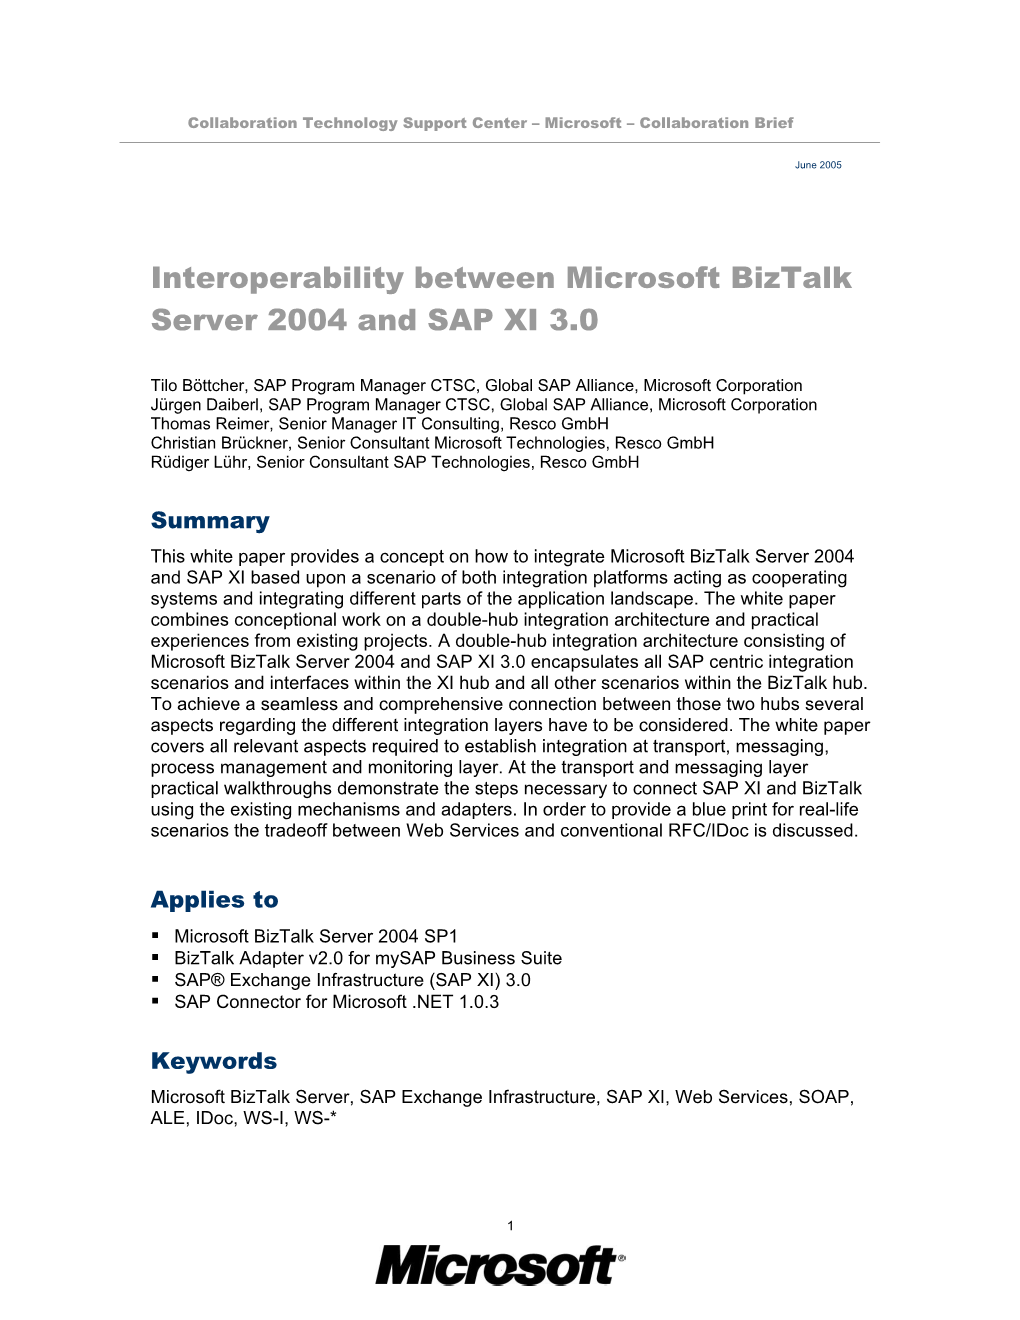 Interoperability Between Microsoft Biztalk Server 2004 and SAP XI 3.0